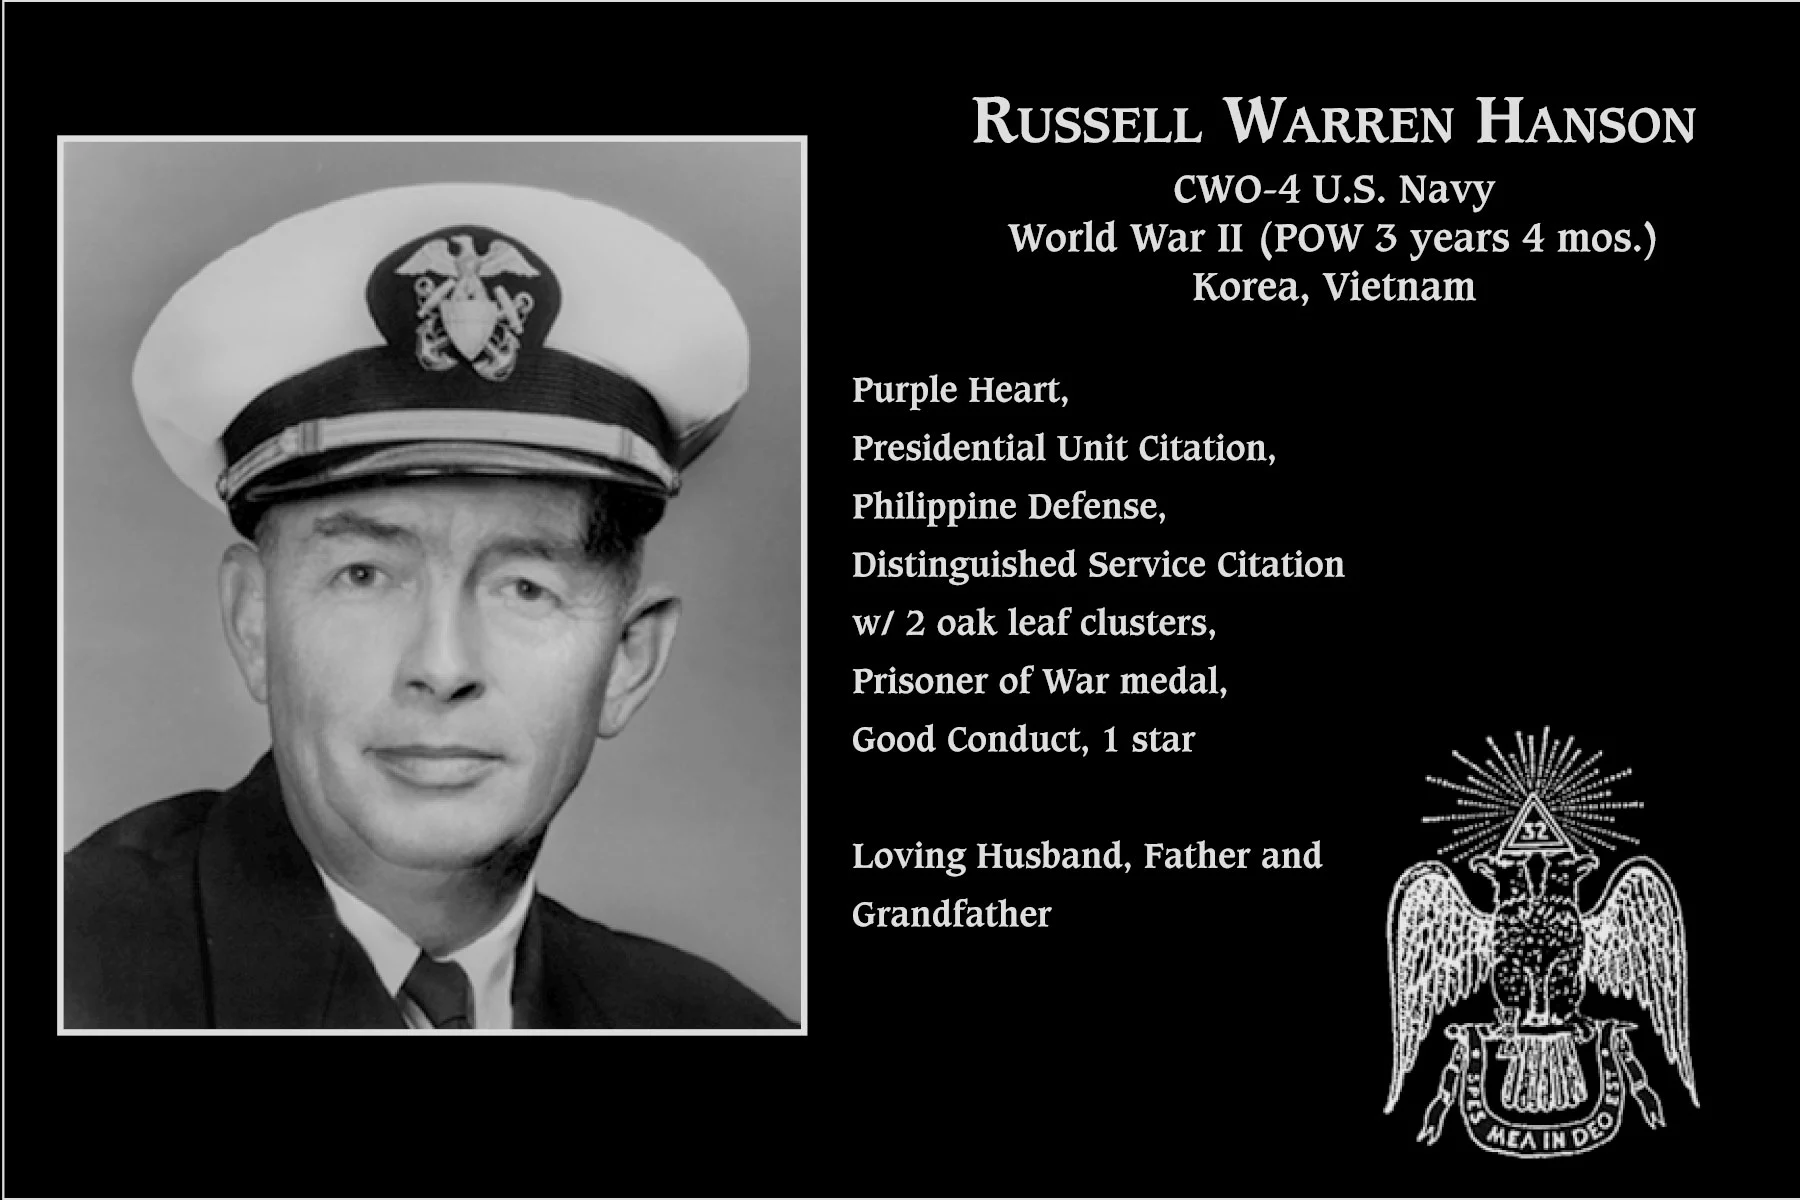 Russell Warren Hanson